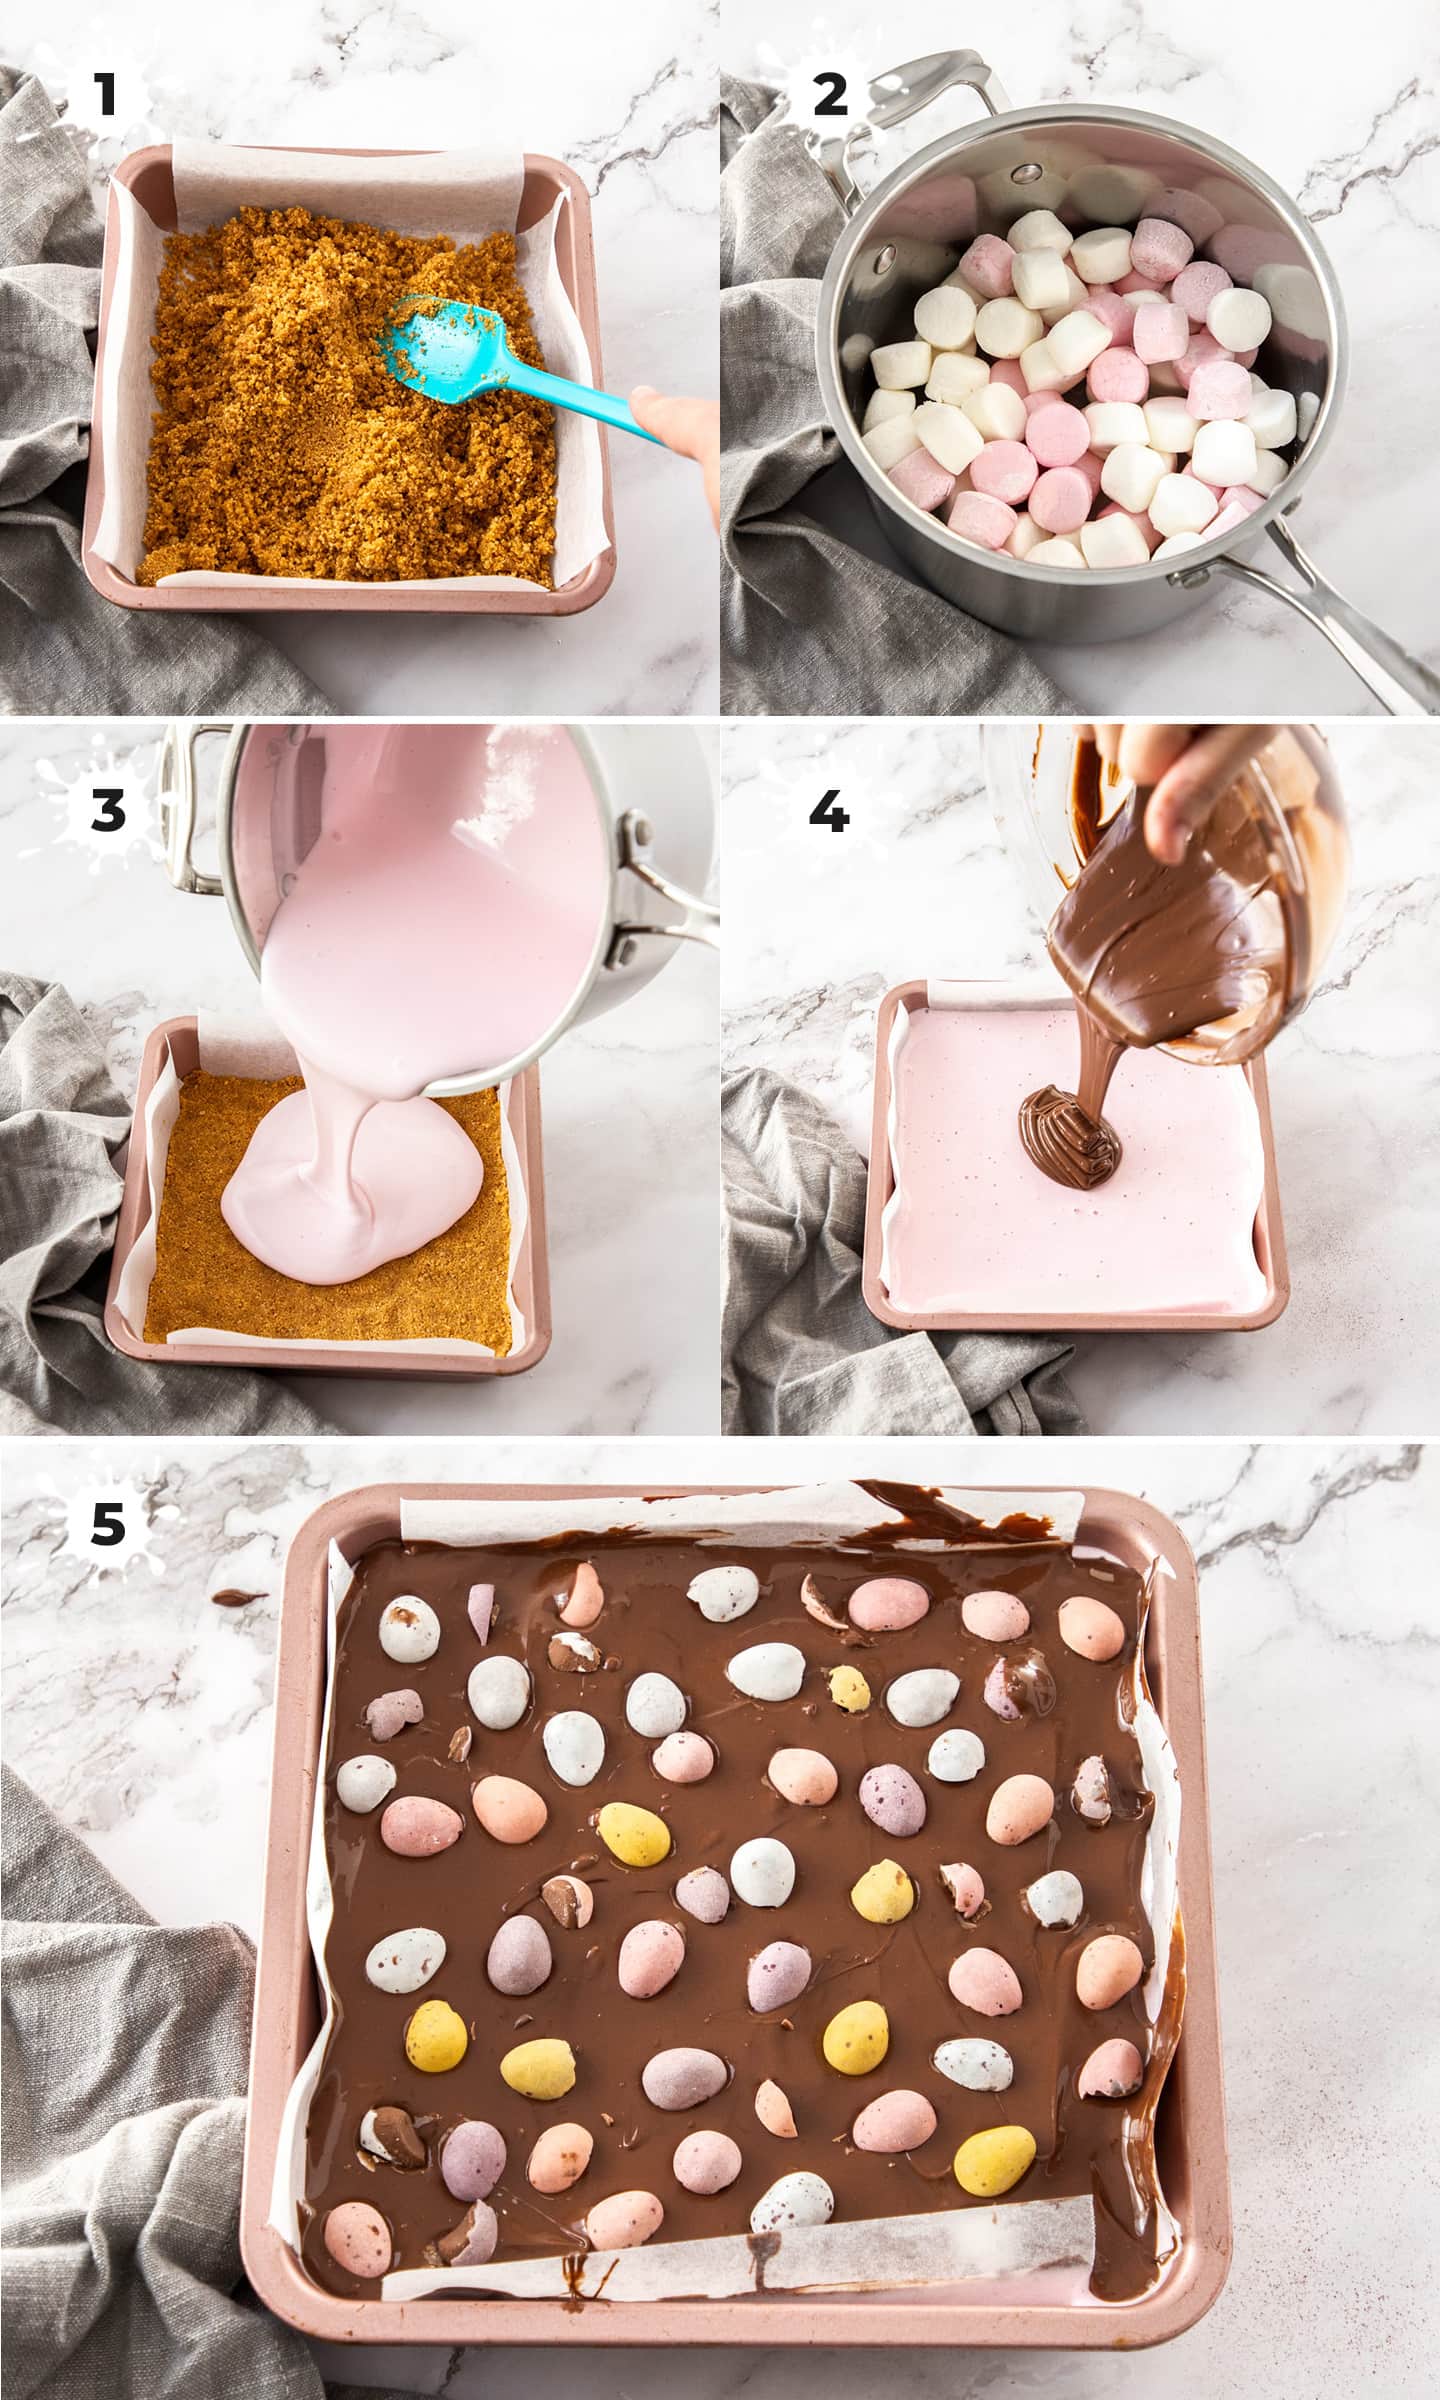 5 images showing how to make easter egg slice.